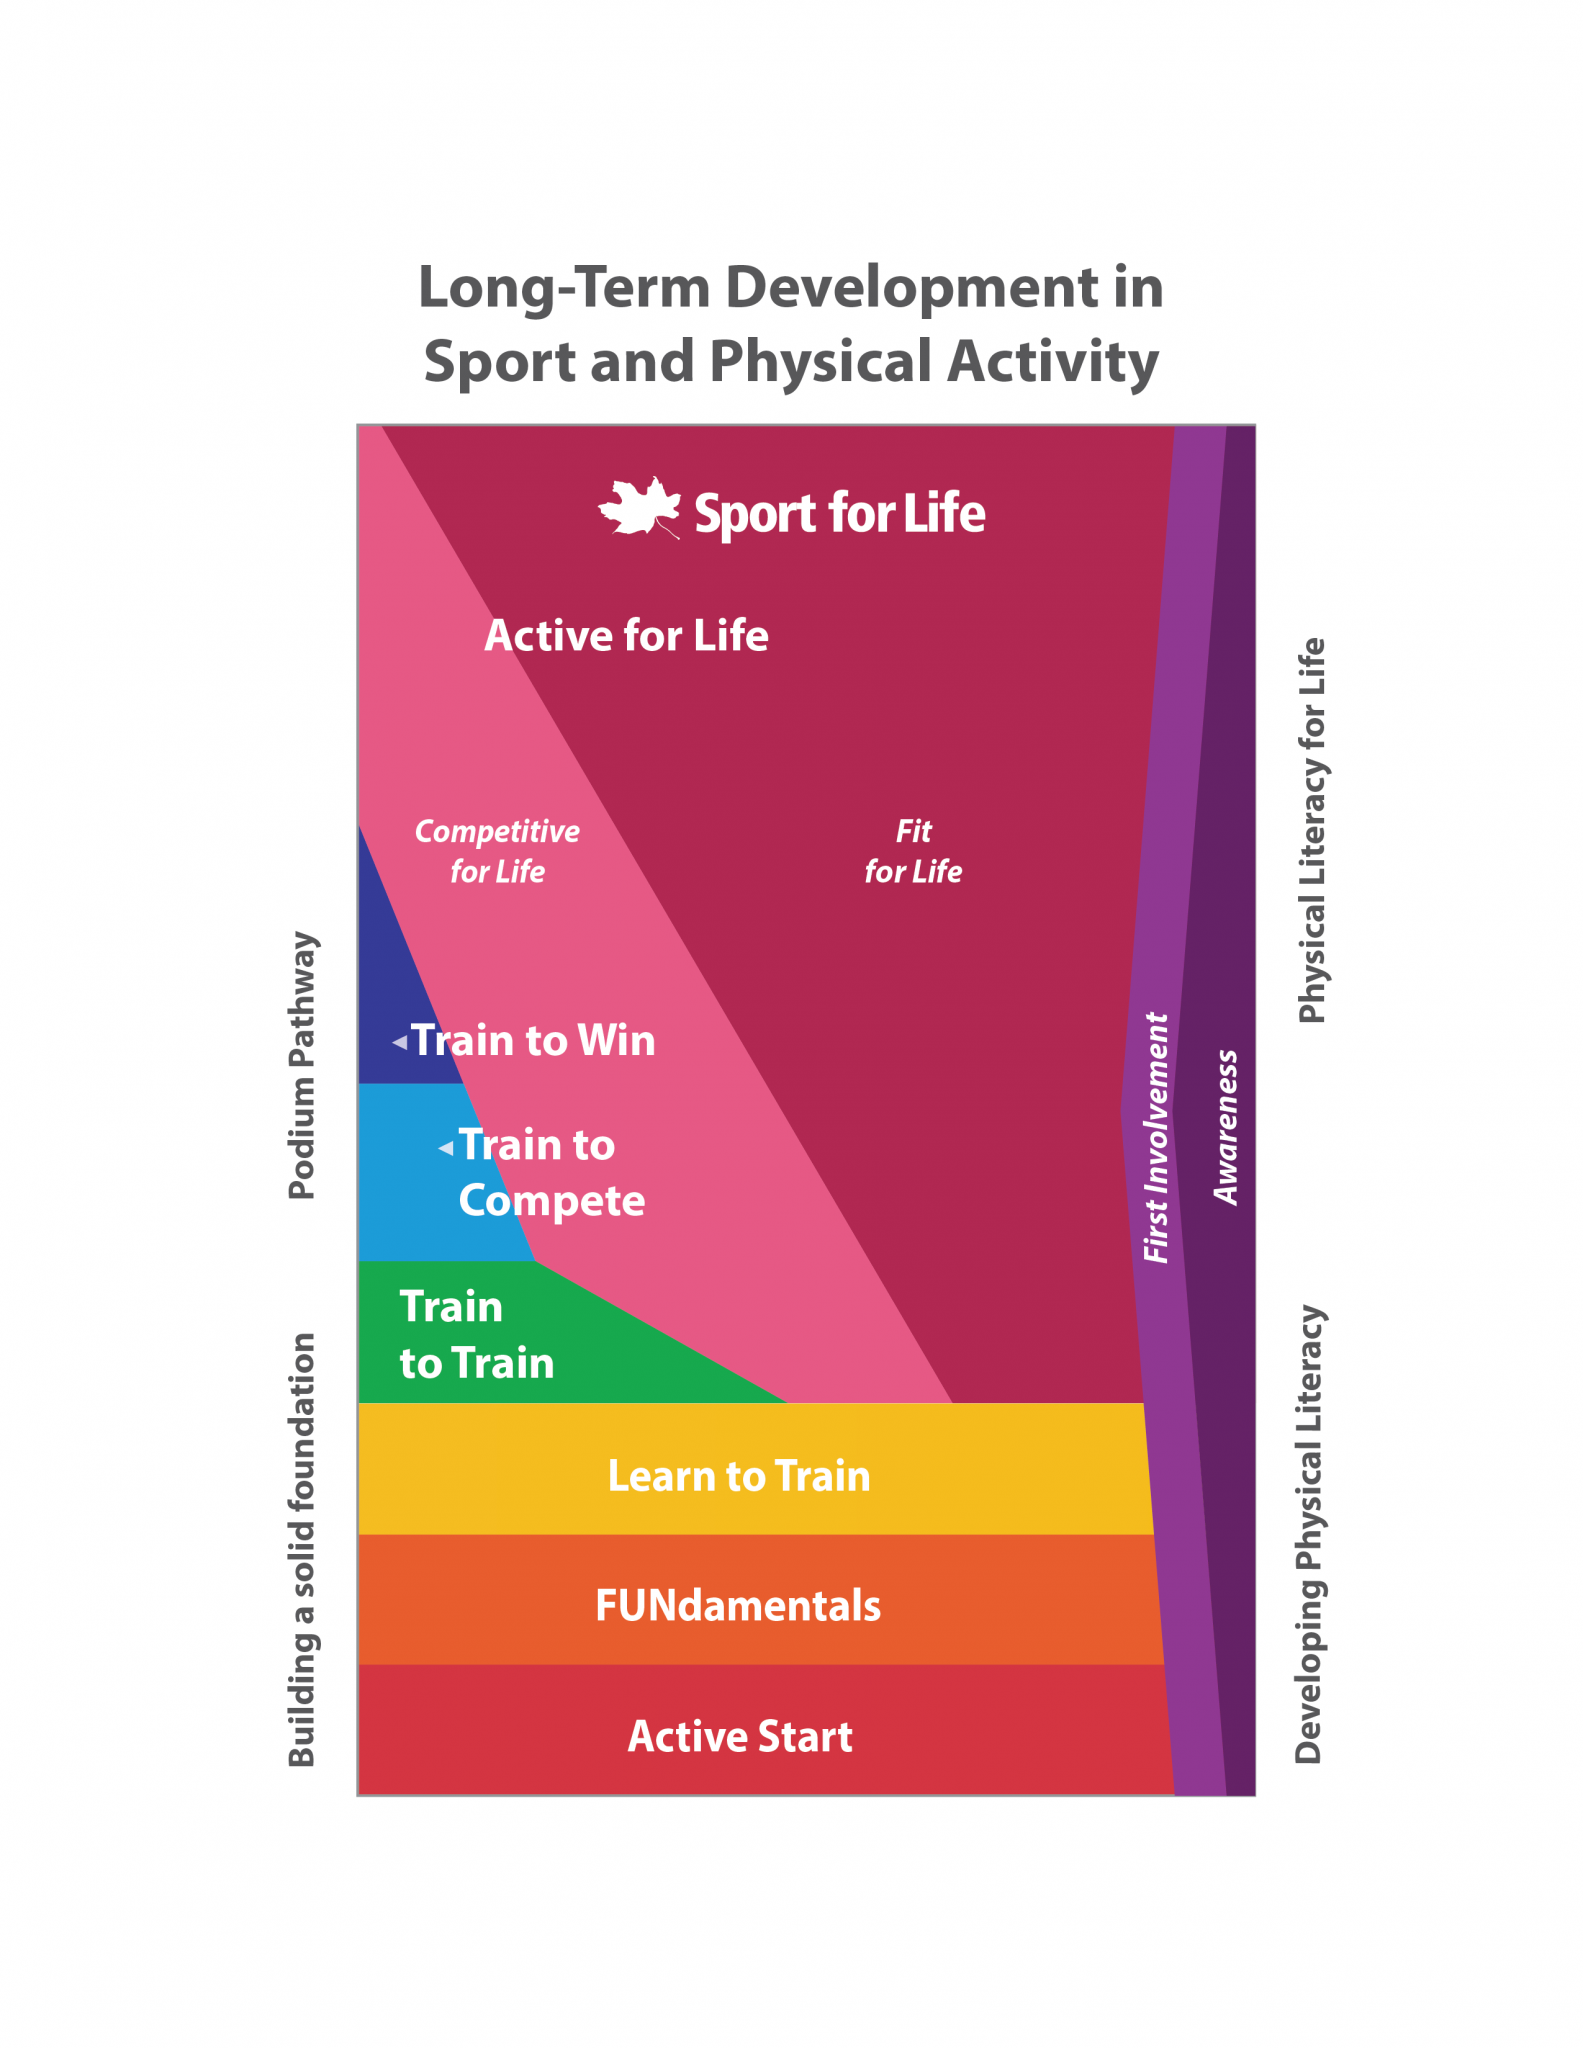 Long-term athletic growth